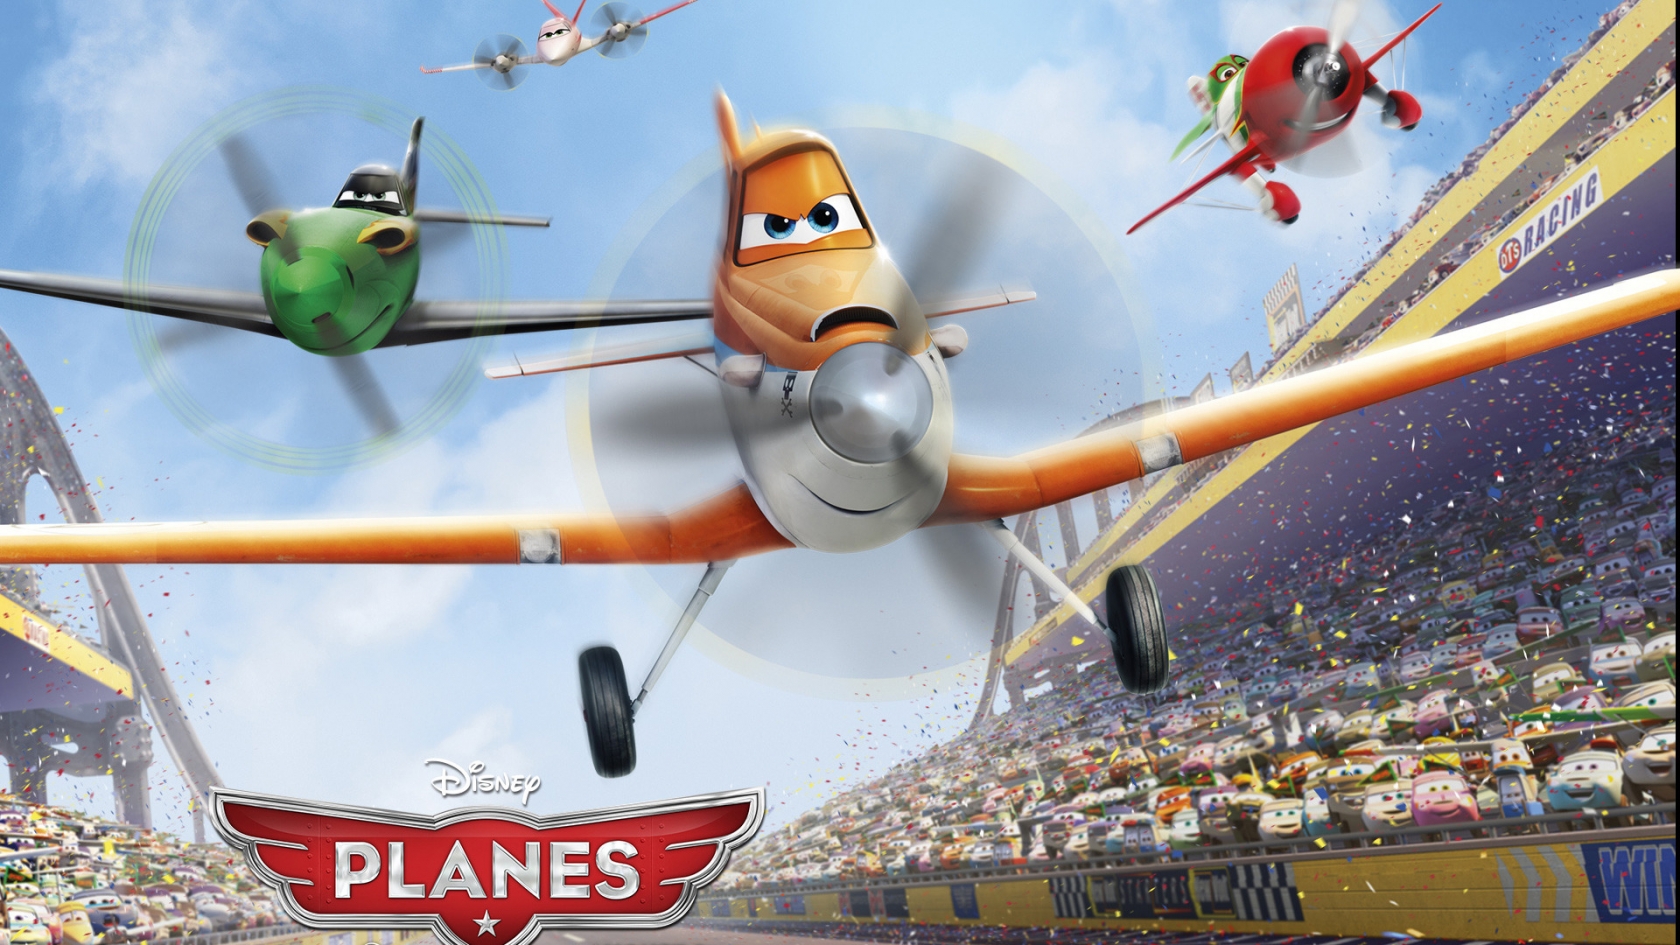 Disney Planes Movie for 1680 x 945 HDTV resolution